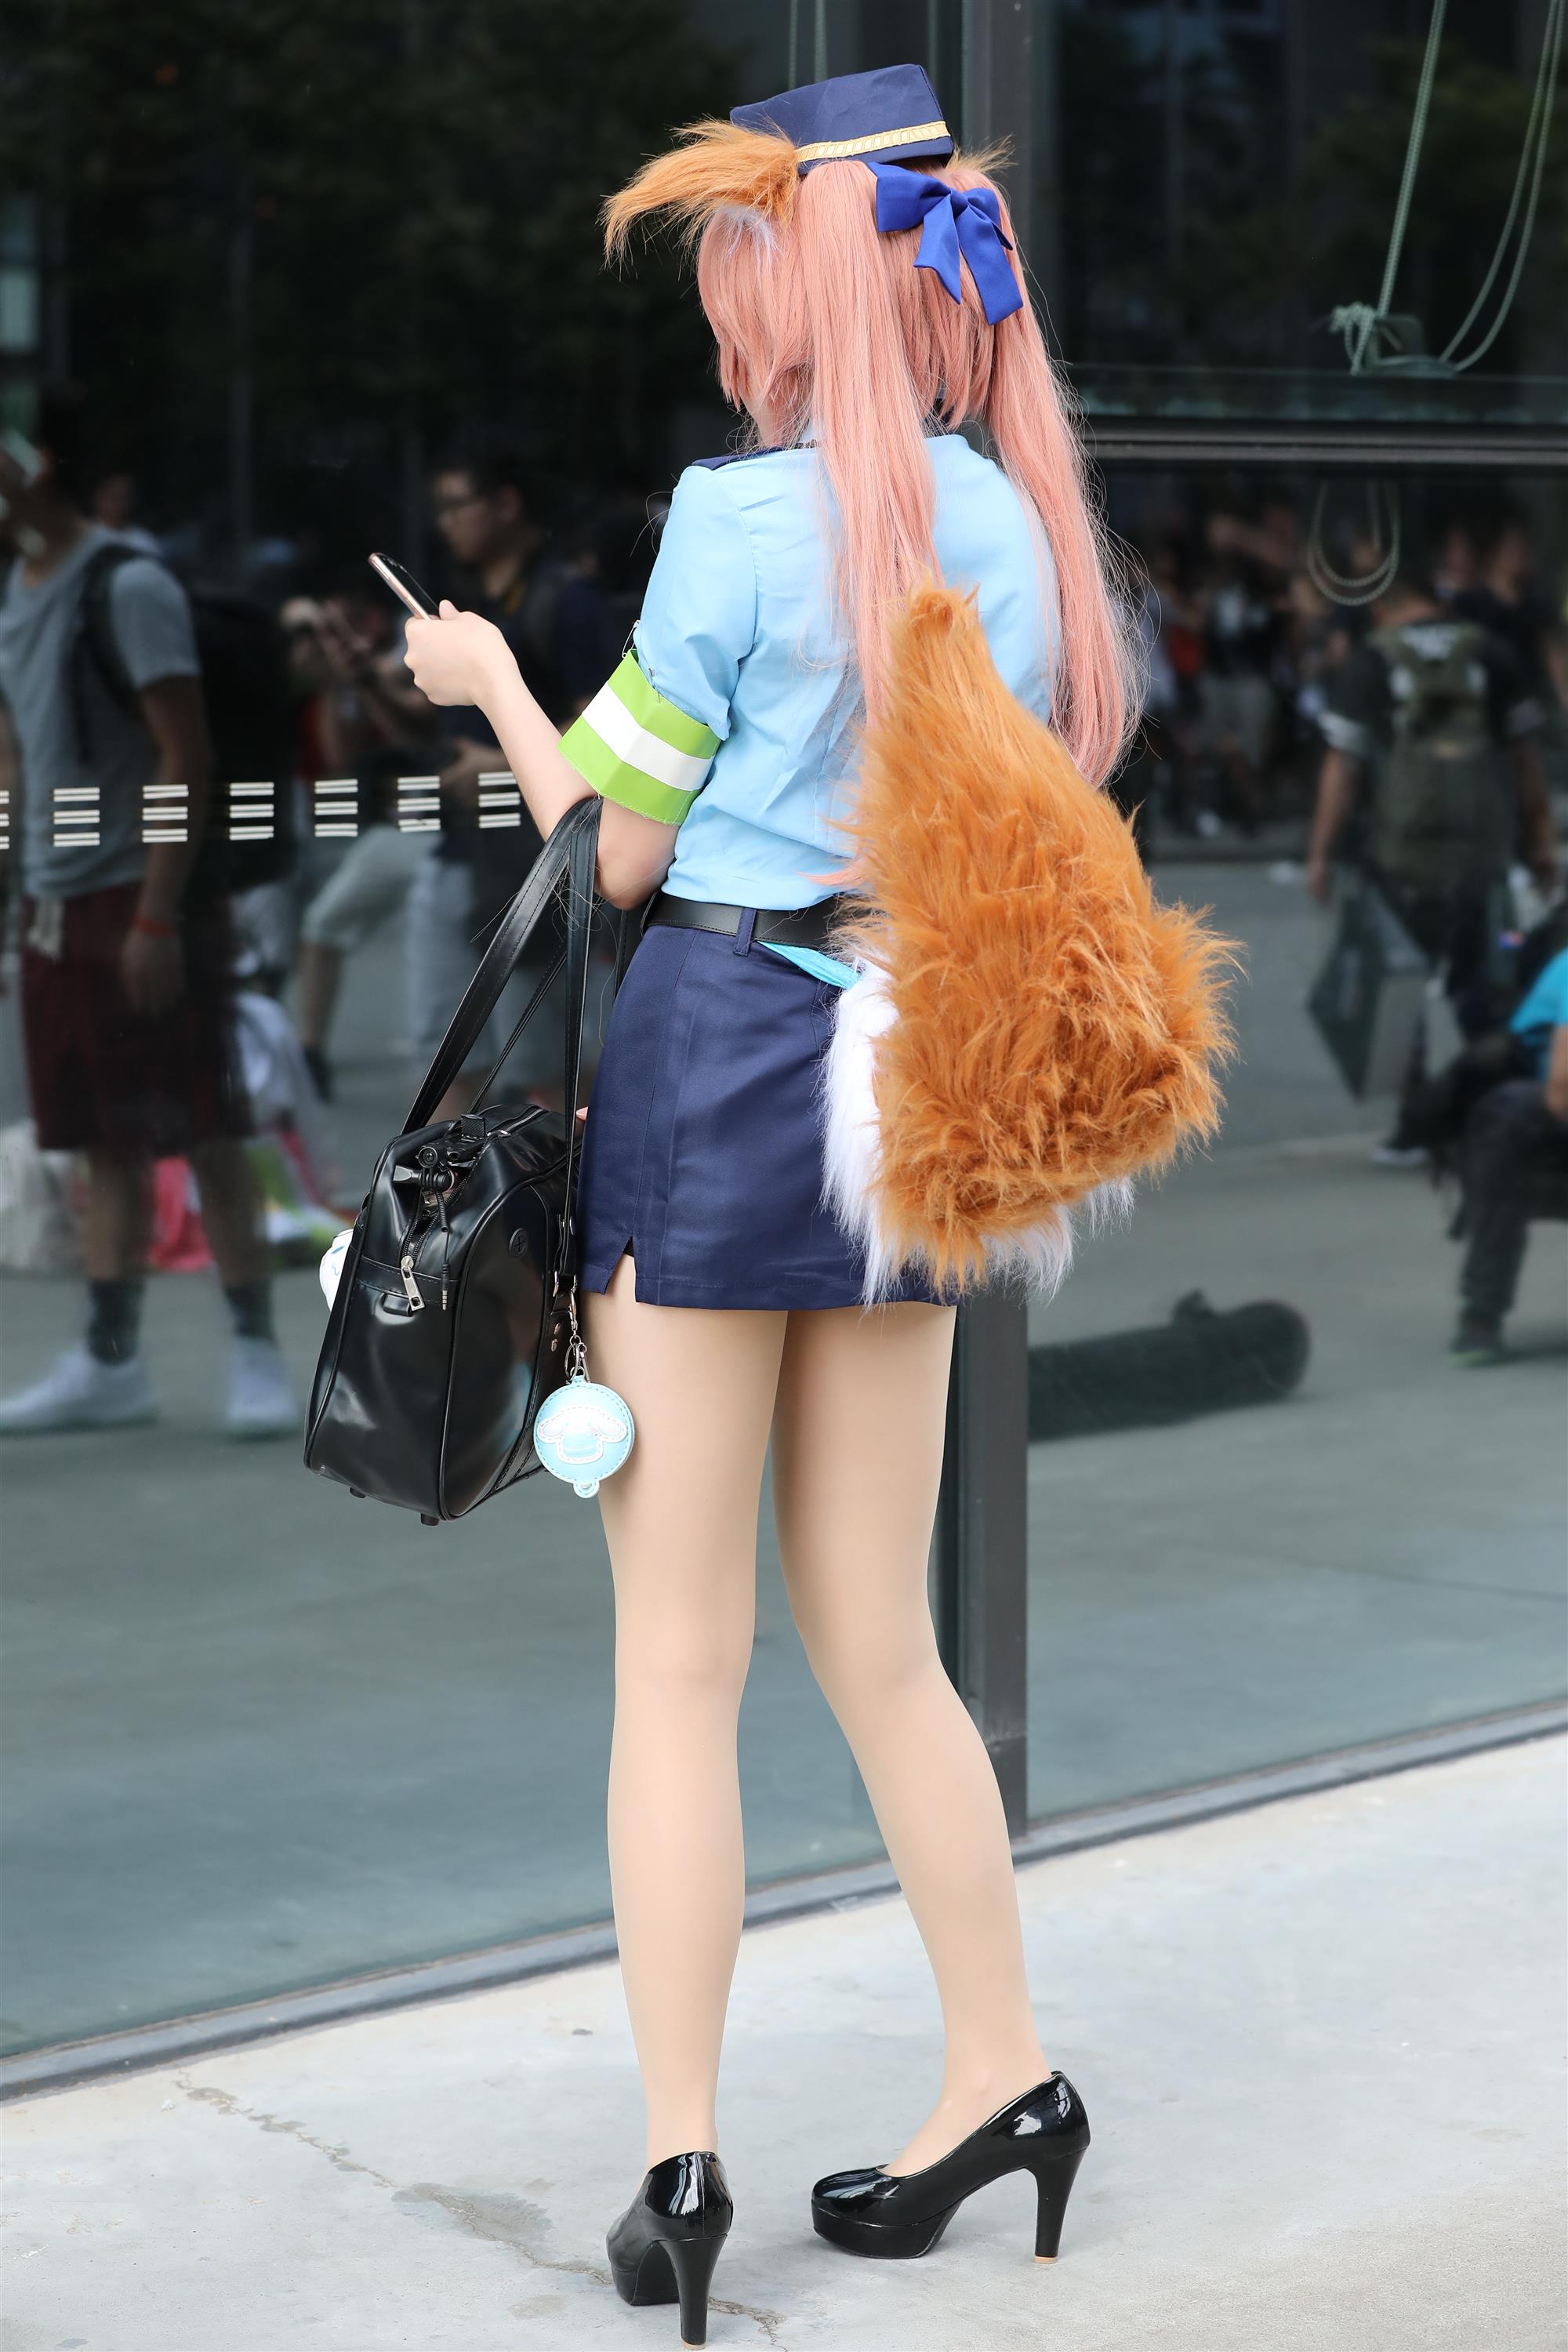 Street cosplay girl - 41.jpg